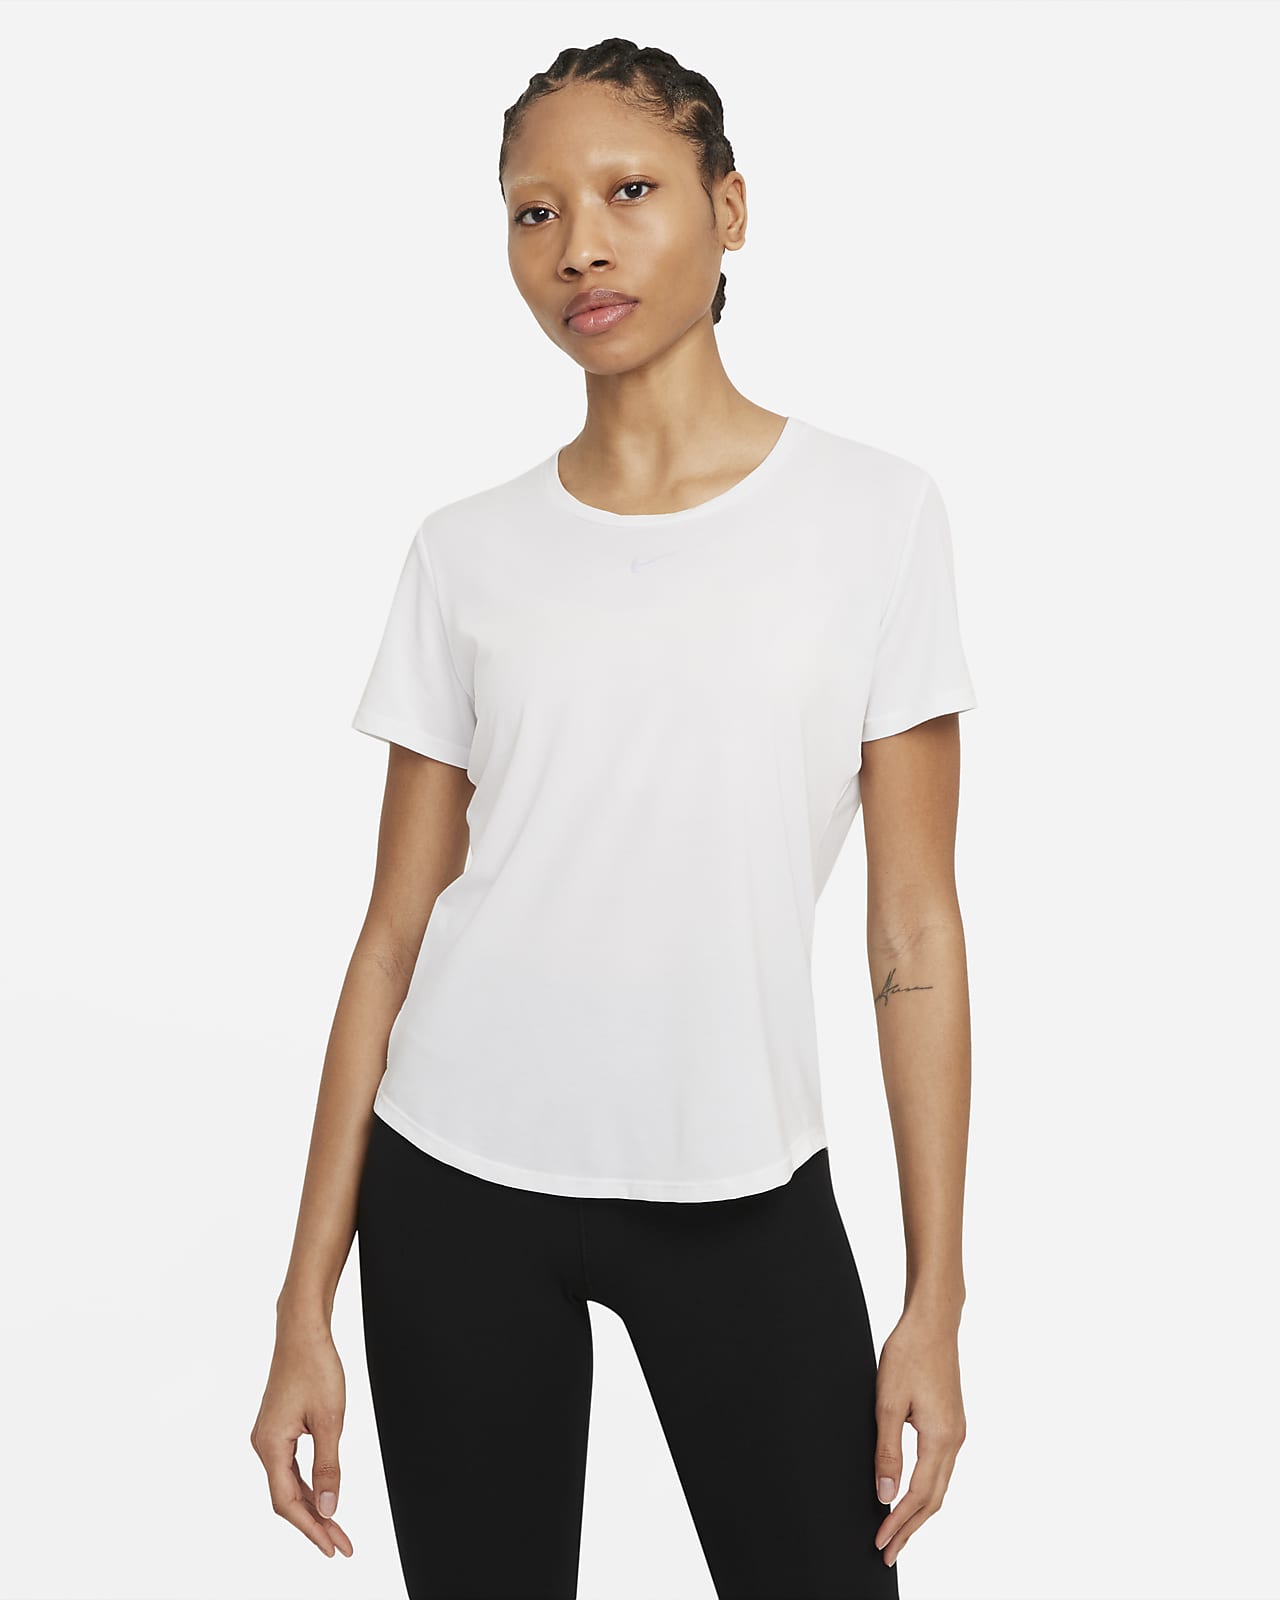 Nike Dri-FIT UV One Luxe Women's Standard Fit Short-Sleeve Top. Nike LU